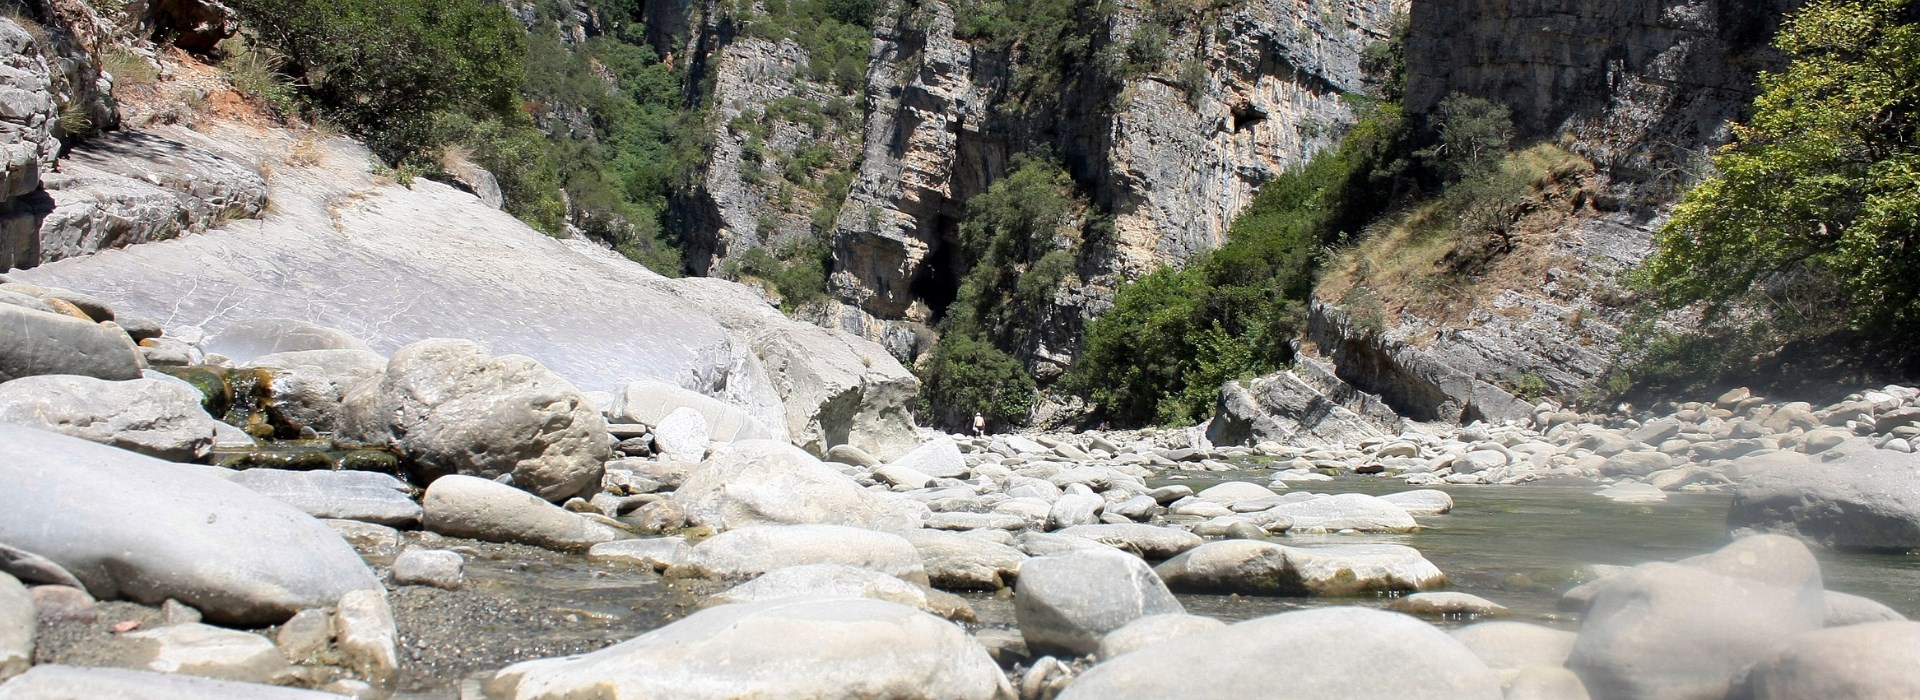 Visiter Le canyon de Langarica - Albanie